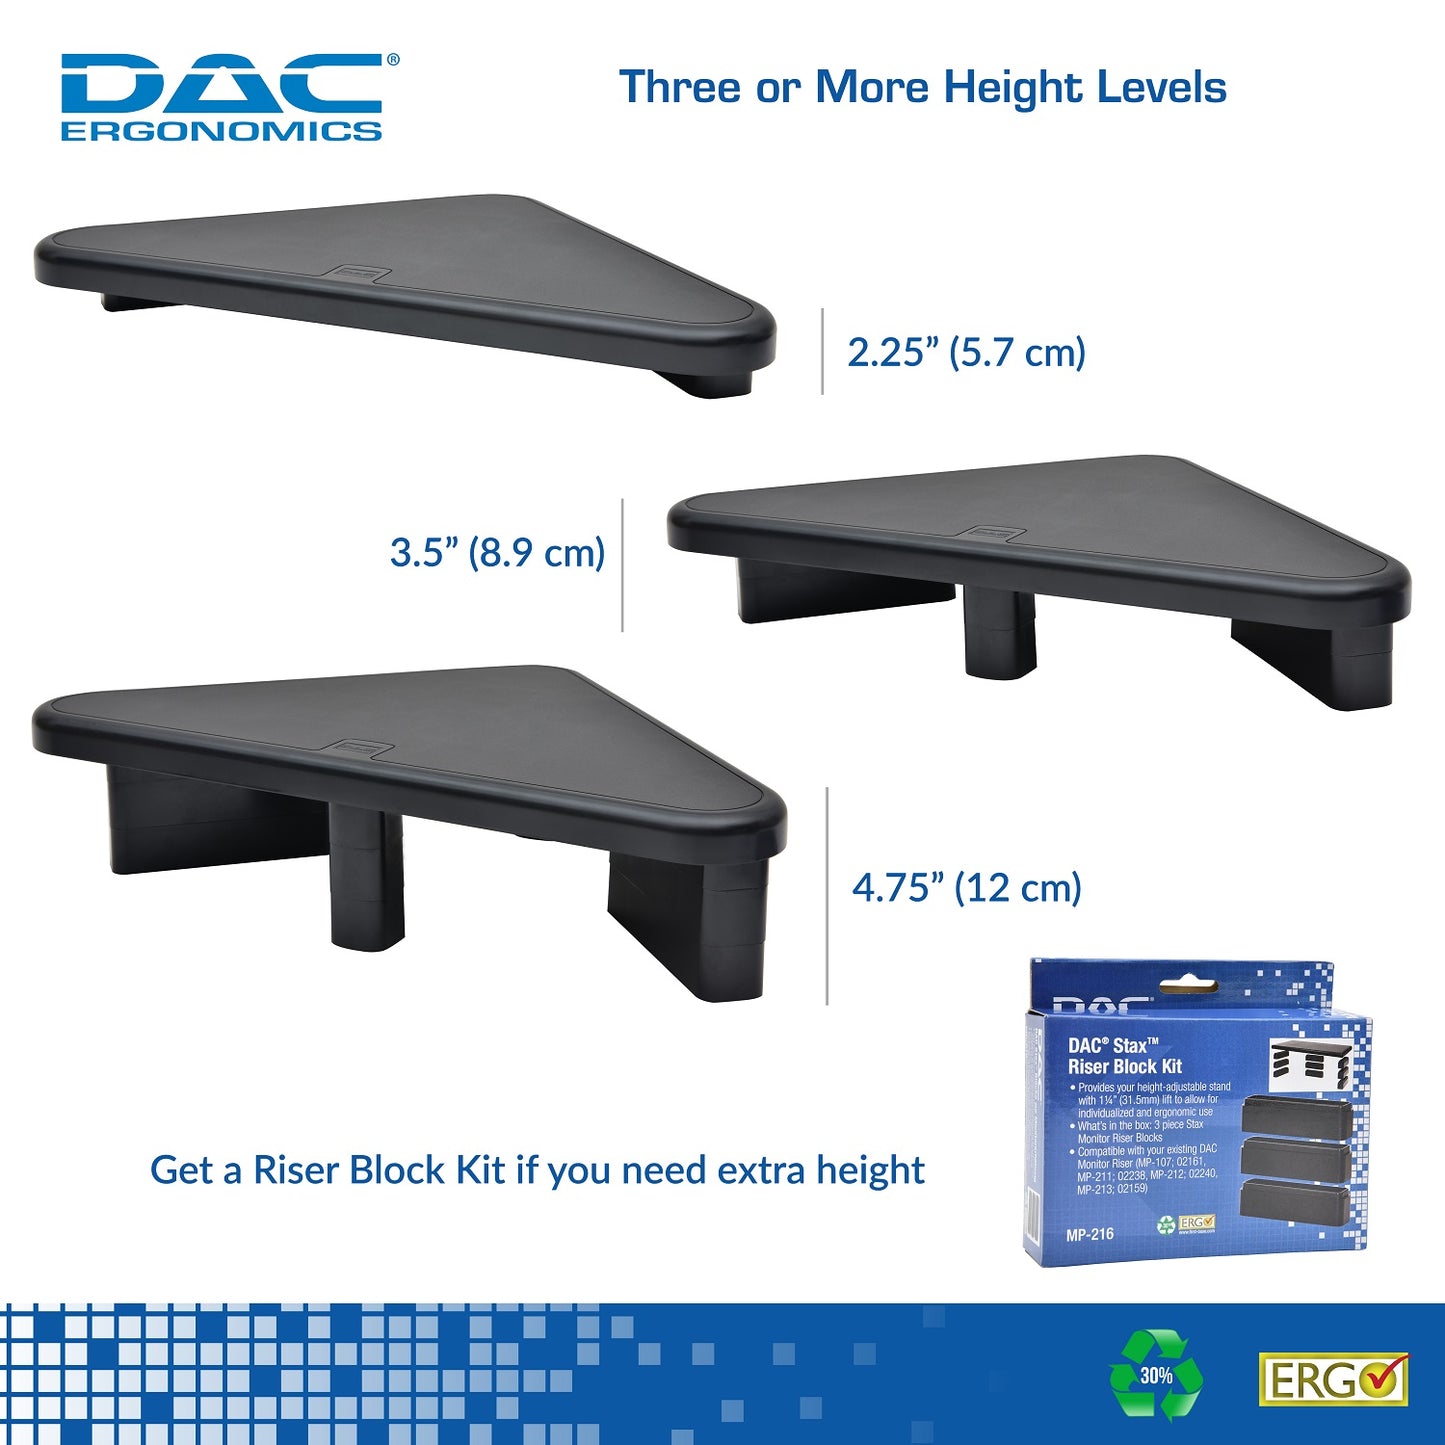 DAC® Stax™  MP-197 Height Adjustable Corner Monitor Riser, Black